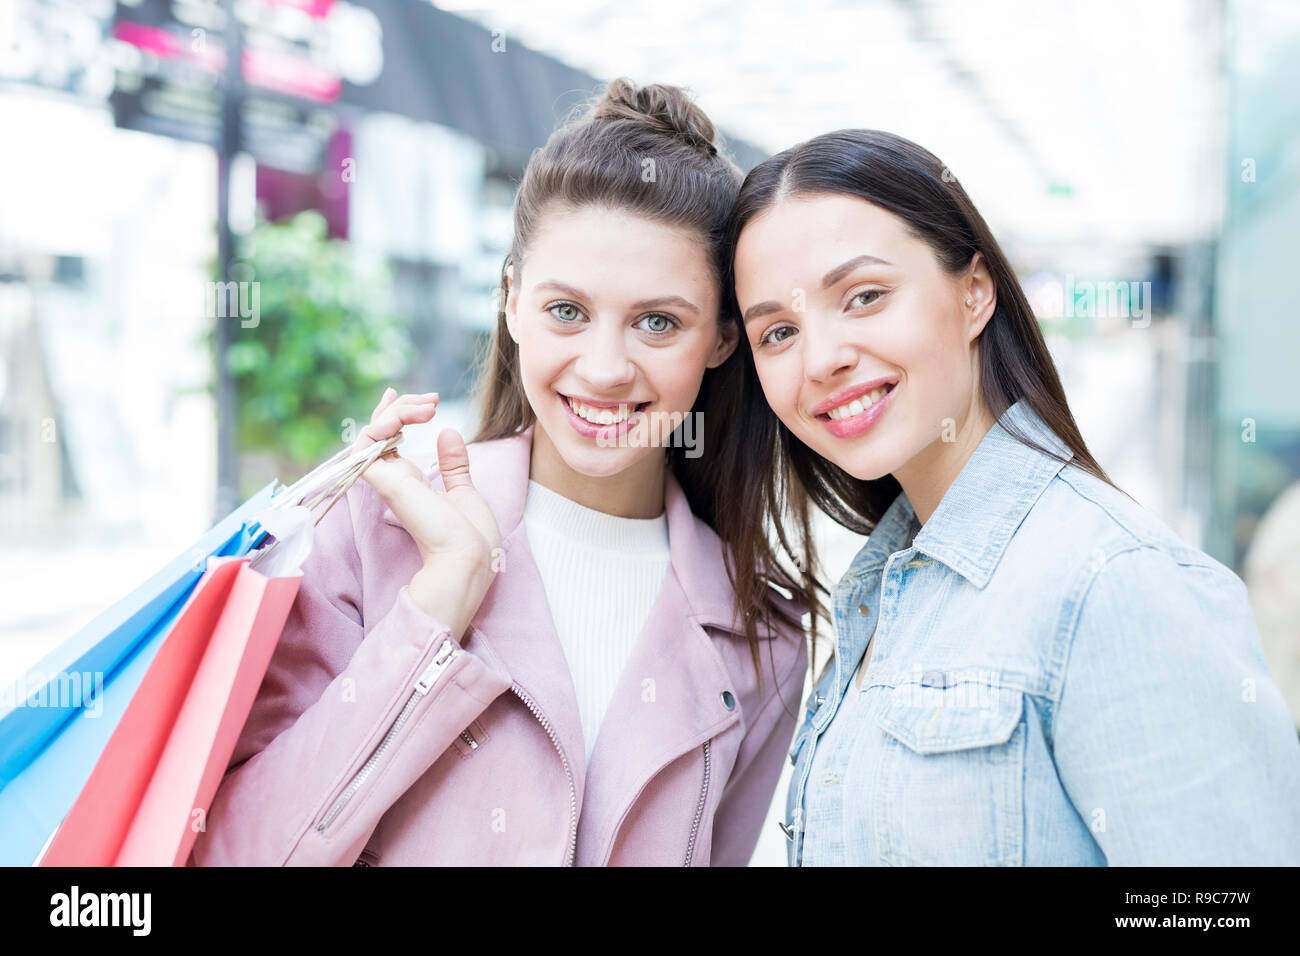 Girls in mall Stock Photo